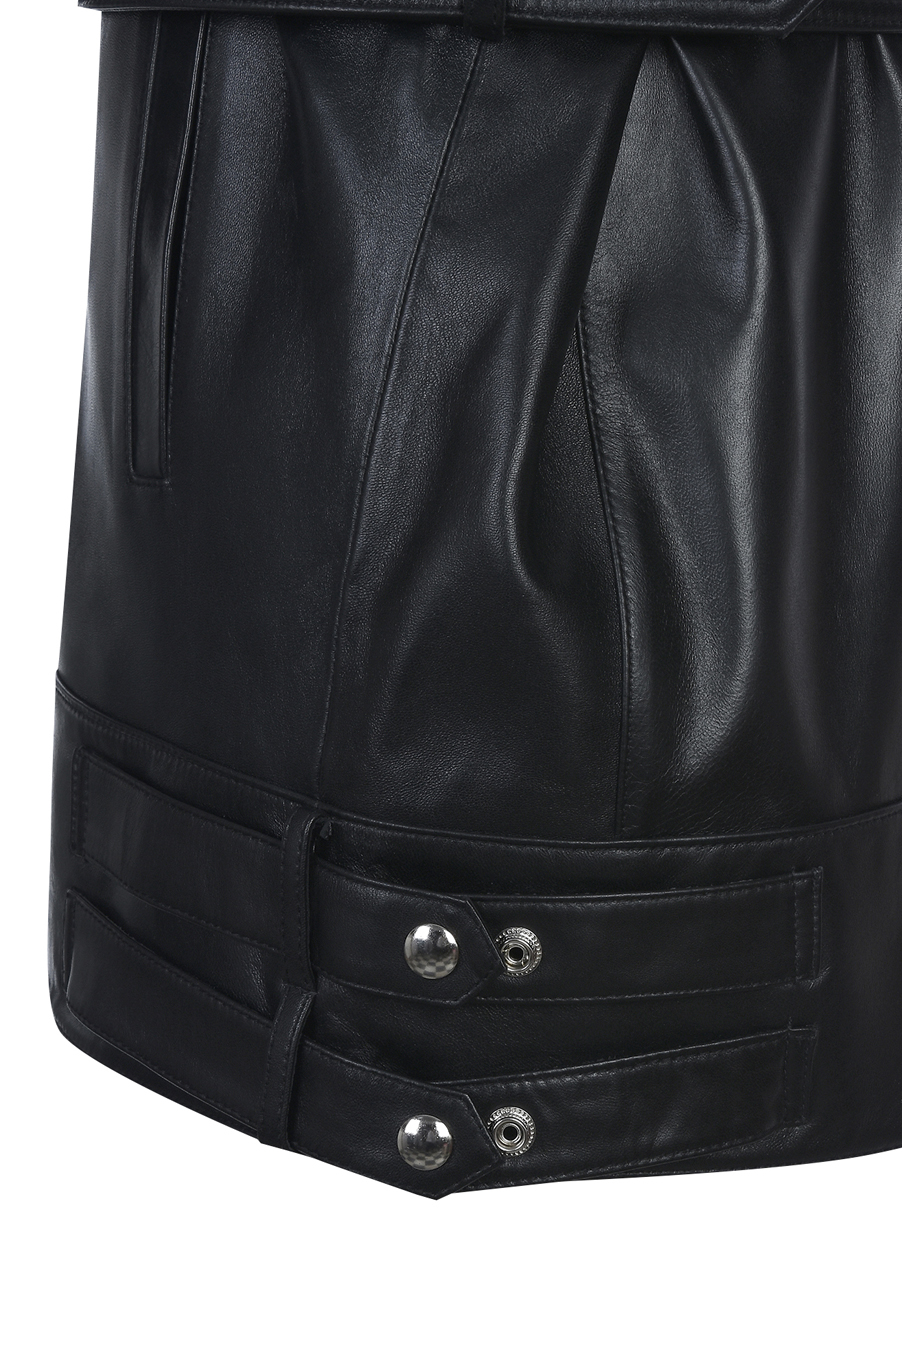 Leather Vest - black(unisex)